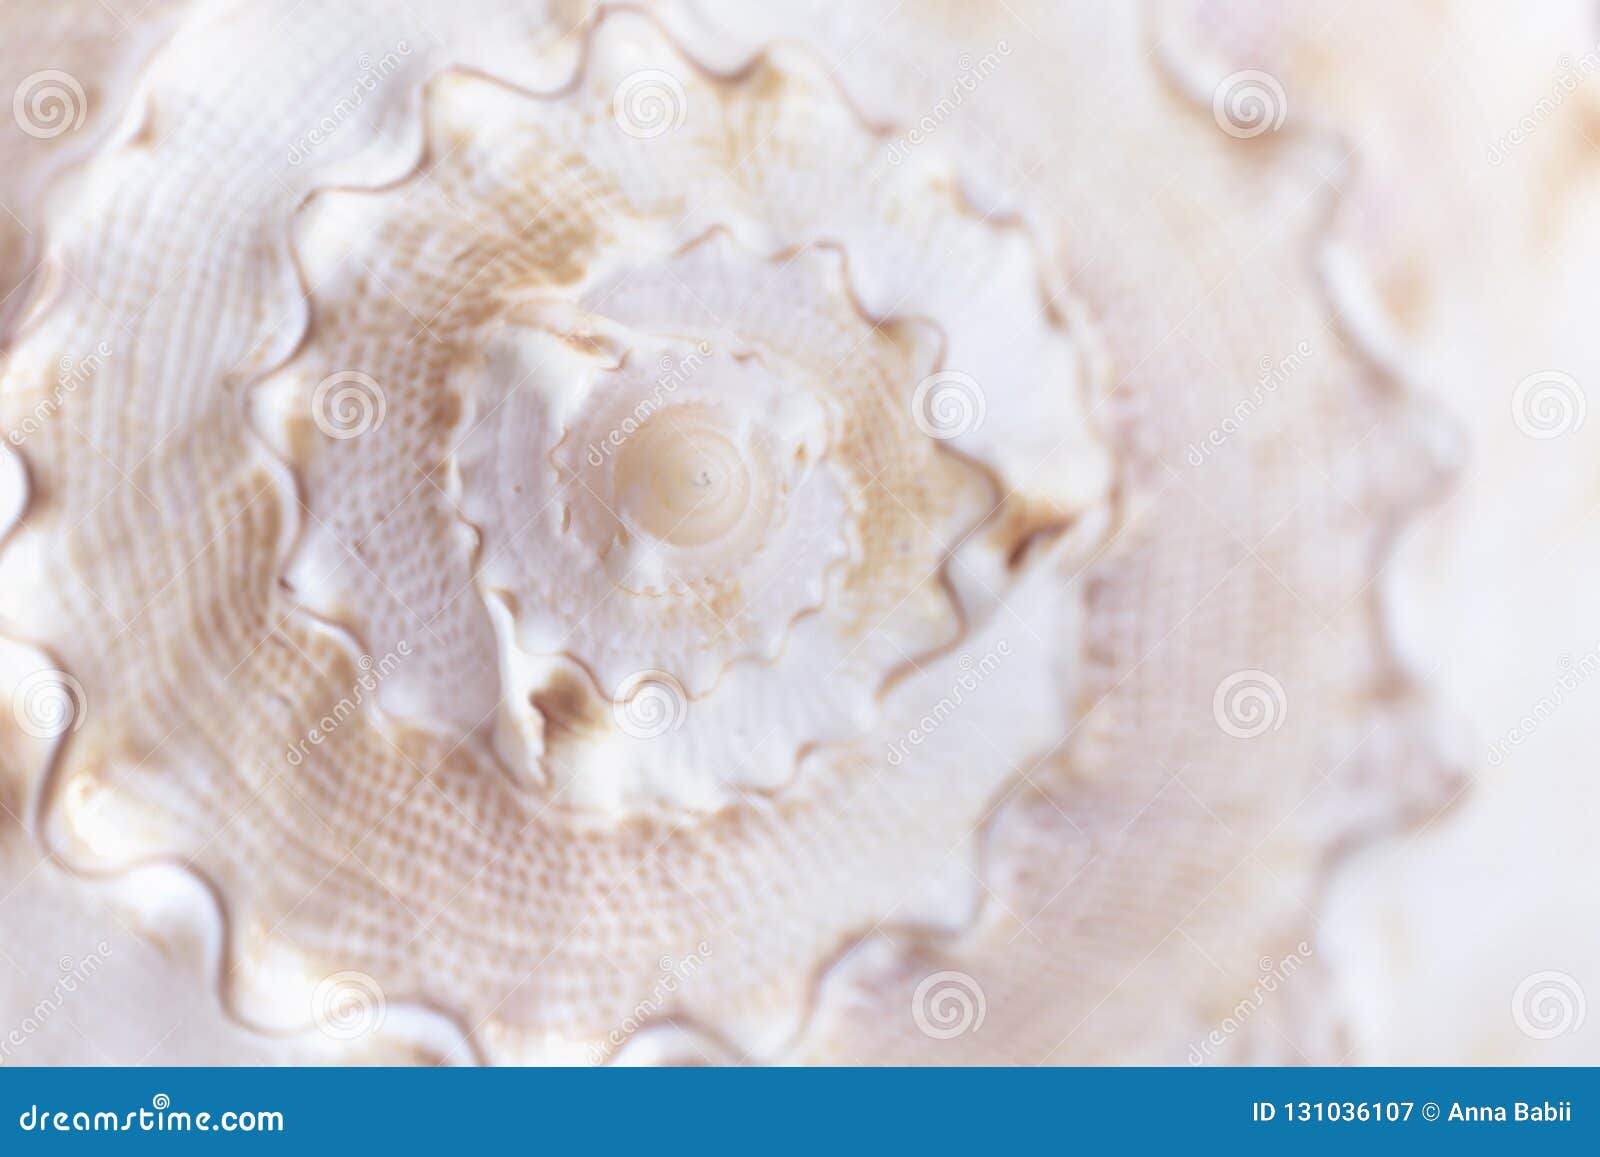 spiral macro seashell. blur close up shell background.